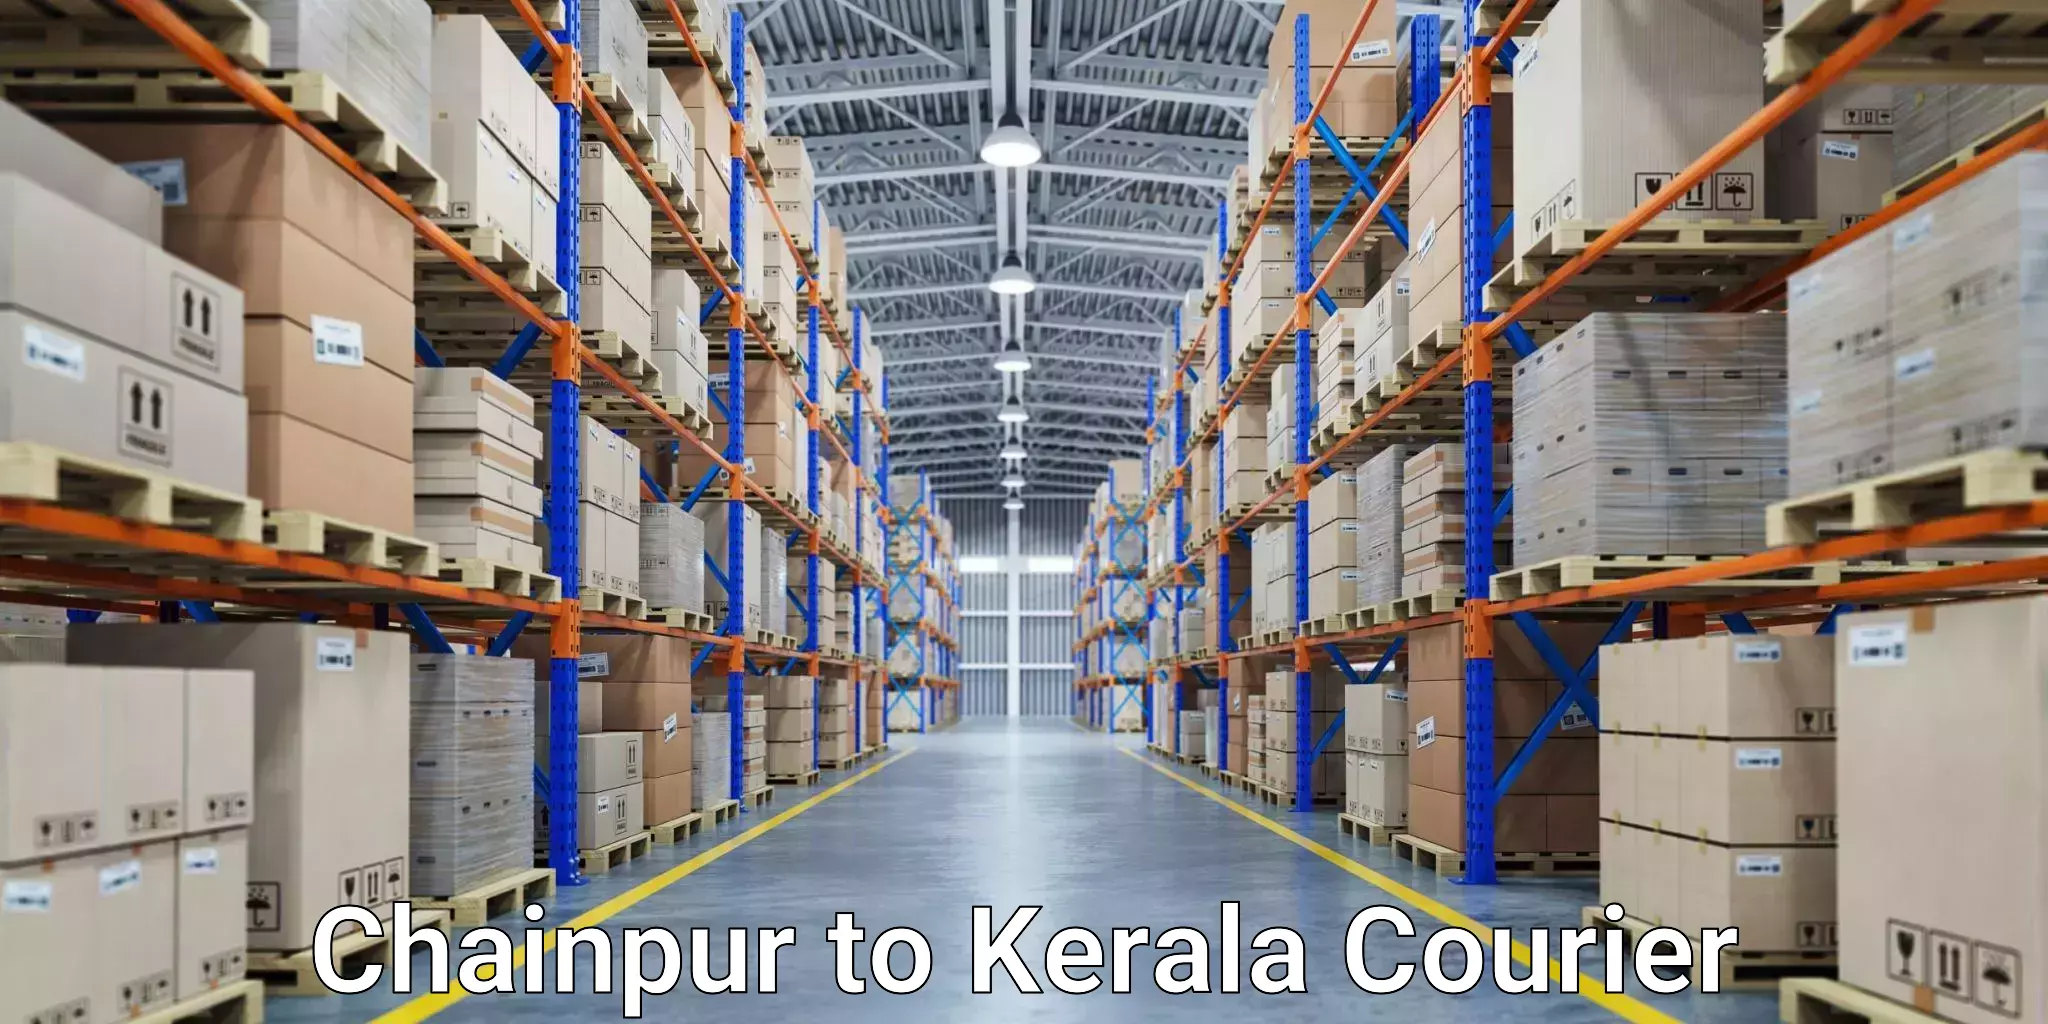 Digital courier platforms Chainpur to Kerala